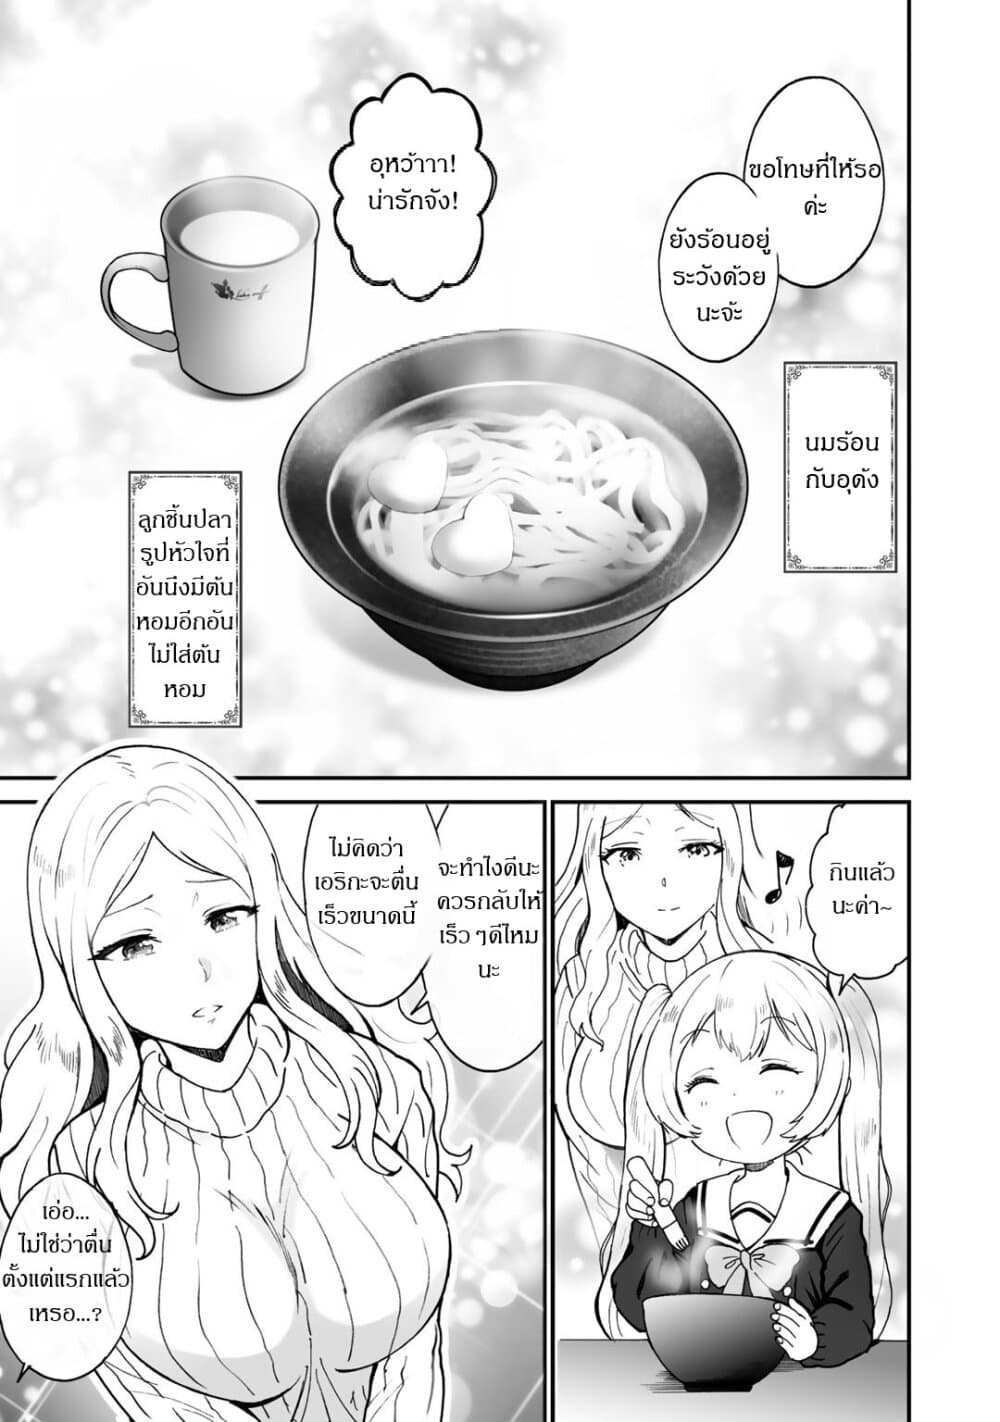 Café Au Lait Wa Elixir Kissaten No Jouren Kyaku Ga Sekai O 5 (5)